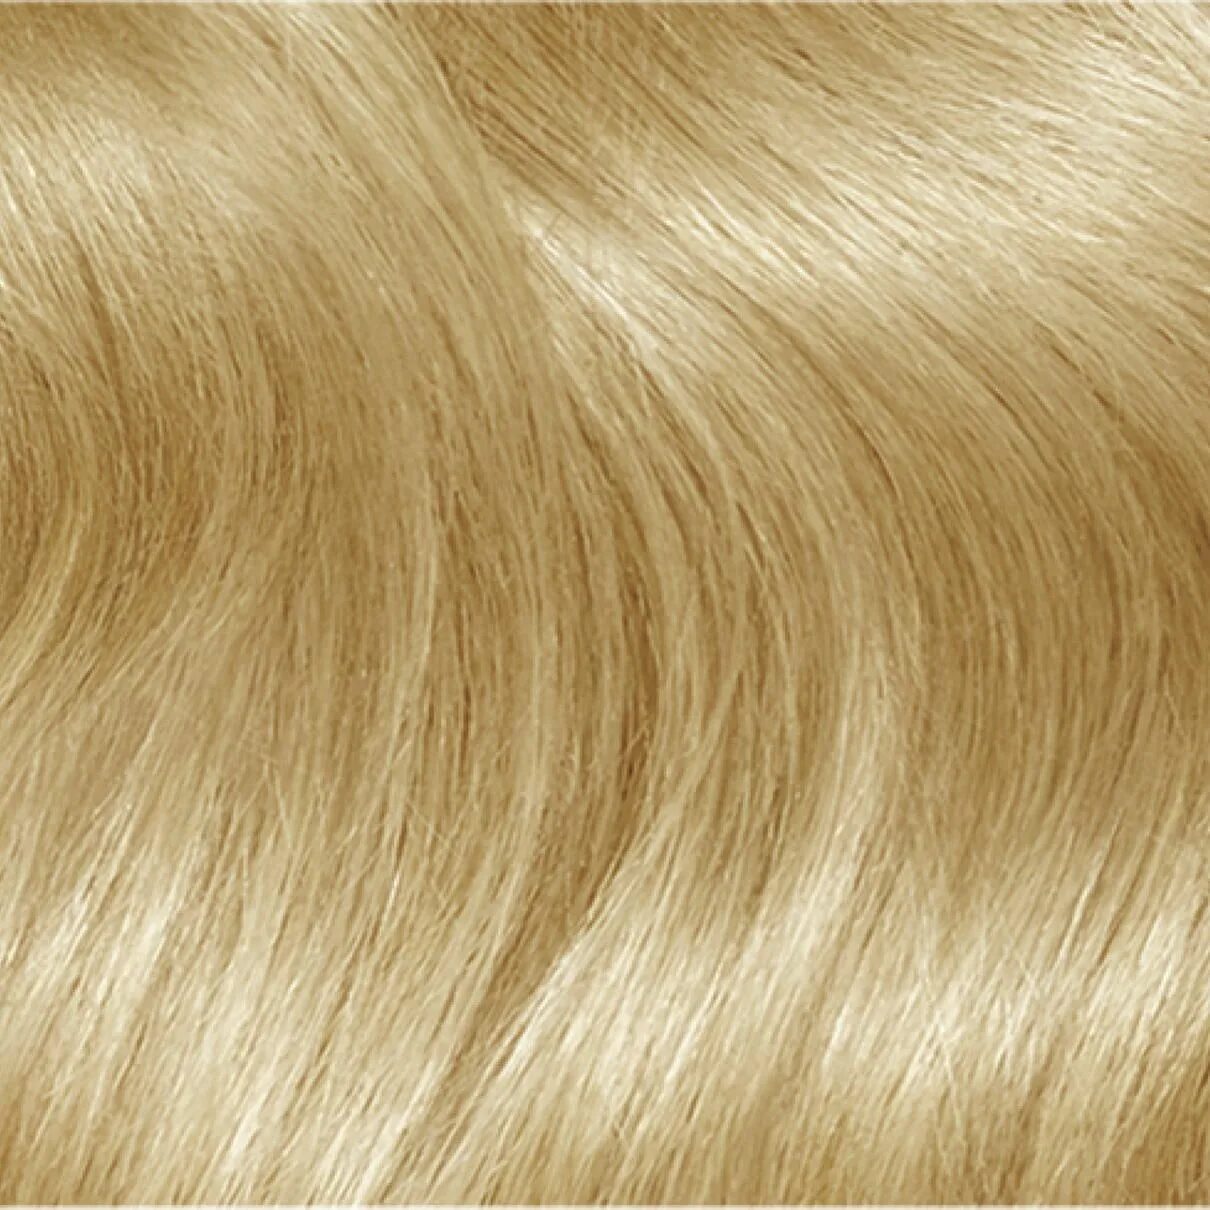 Light blonde. Золотистый блондин. Текстура волос. Светлый золотистый блонд. Светлые волосы текстура.